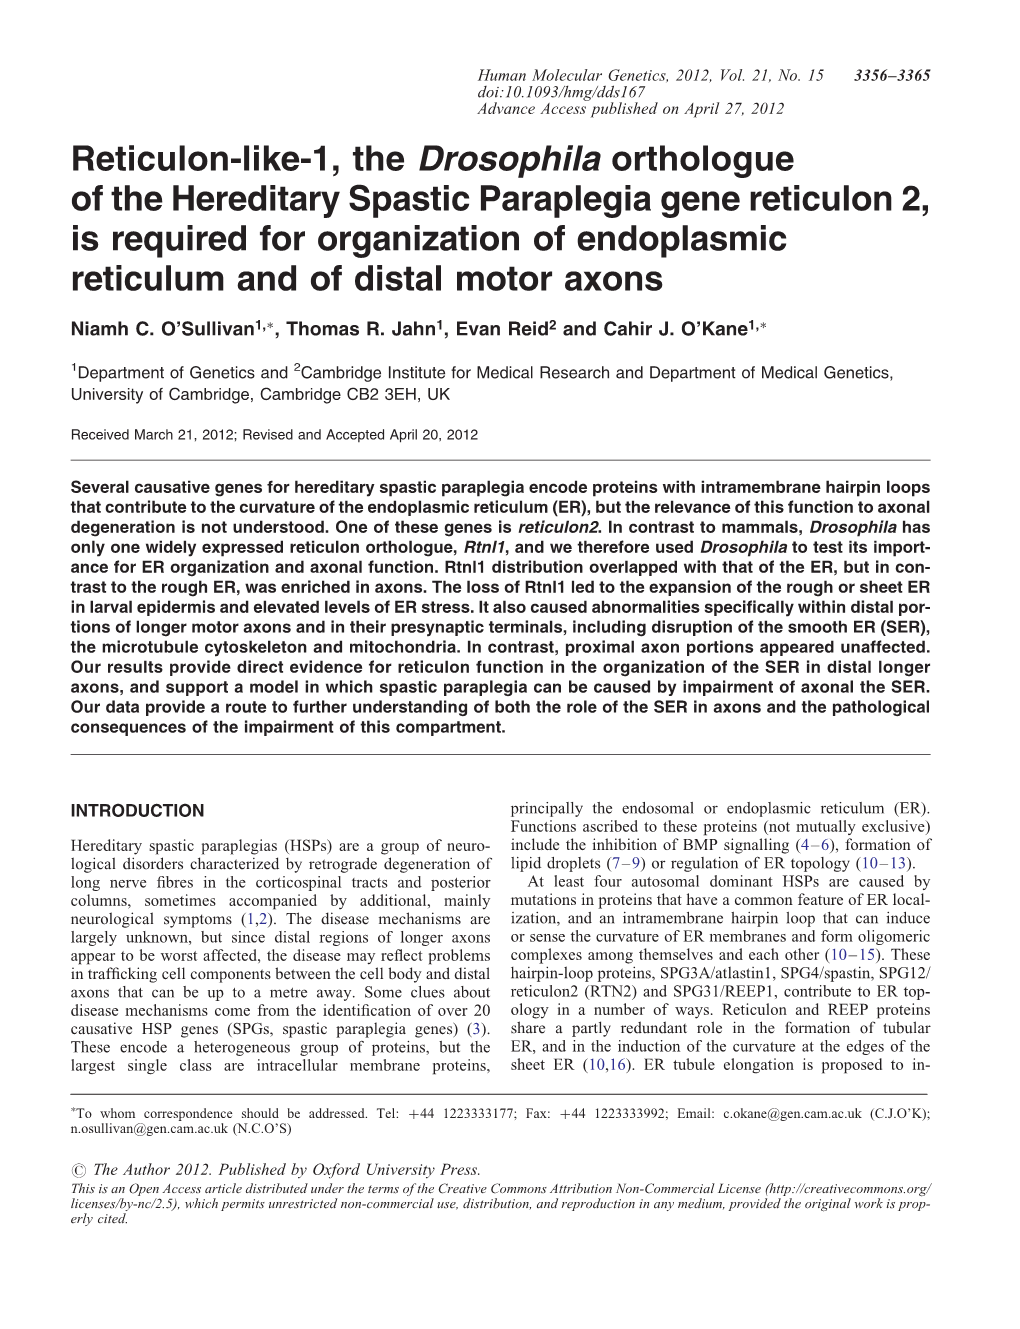 Reticulon-Like-1, the Drosophila Orthologue of the Hereditary Spastic